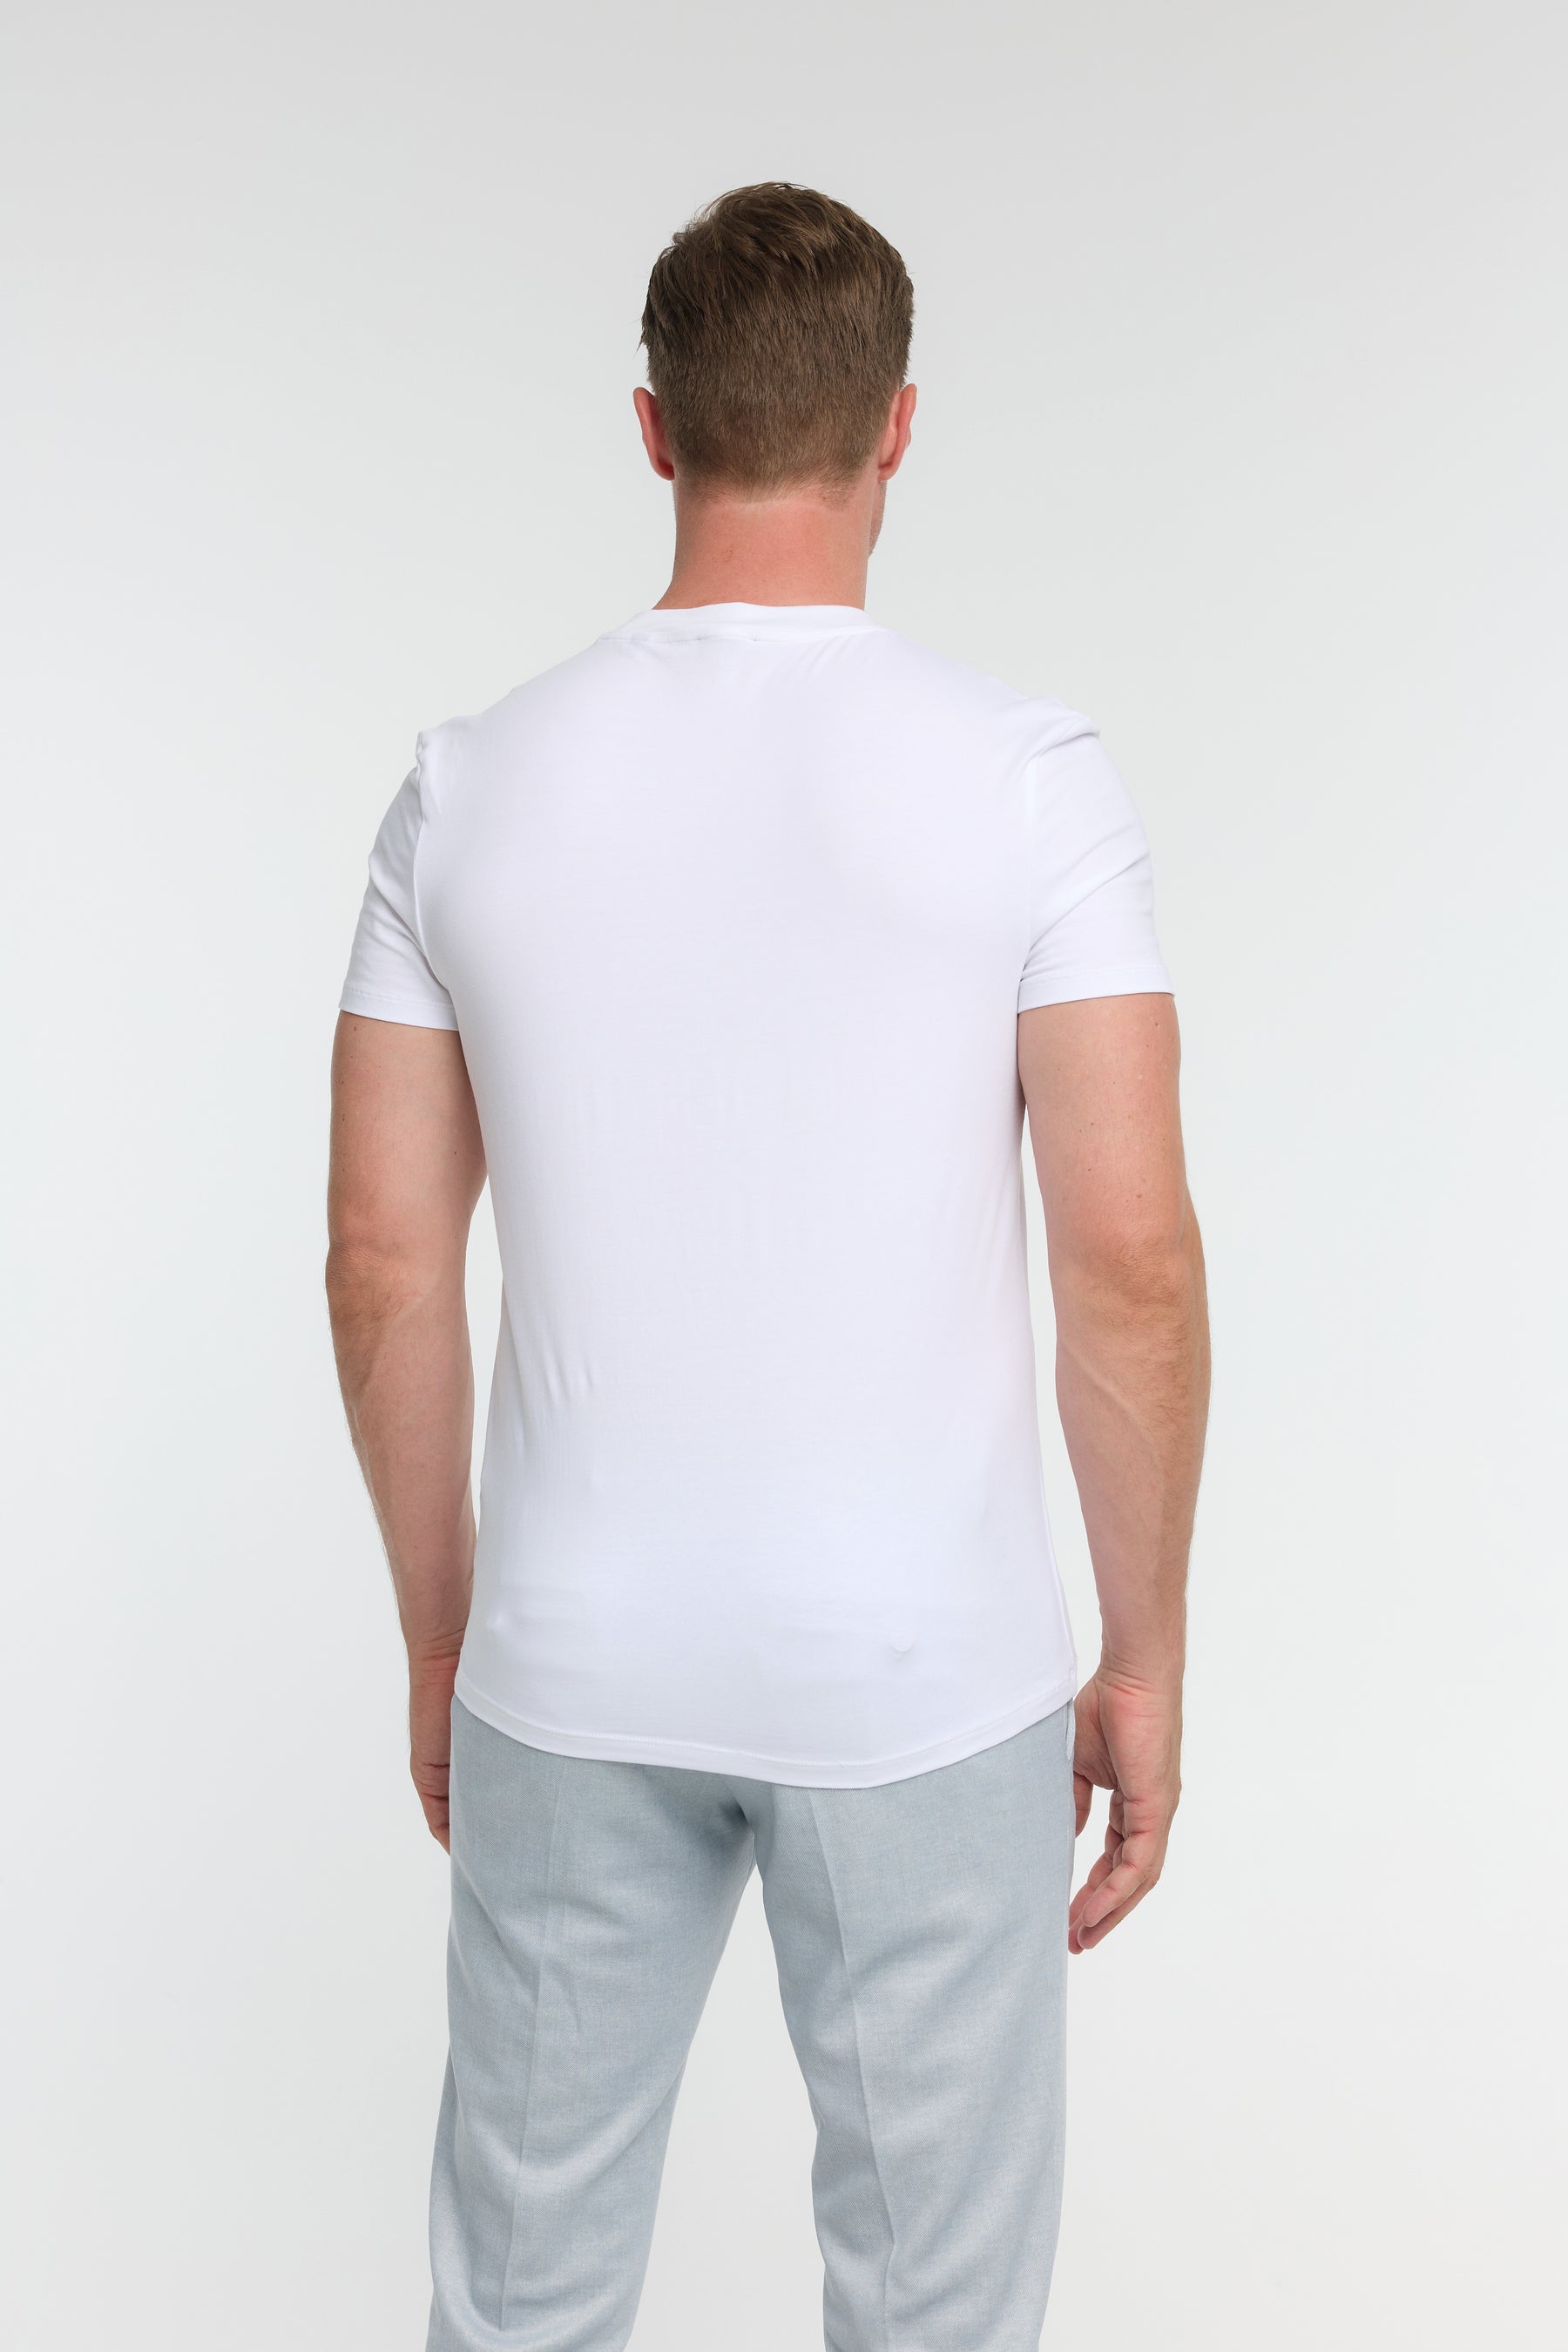 T-Shirt DiFlo 201-100 Weiß